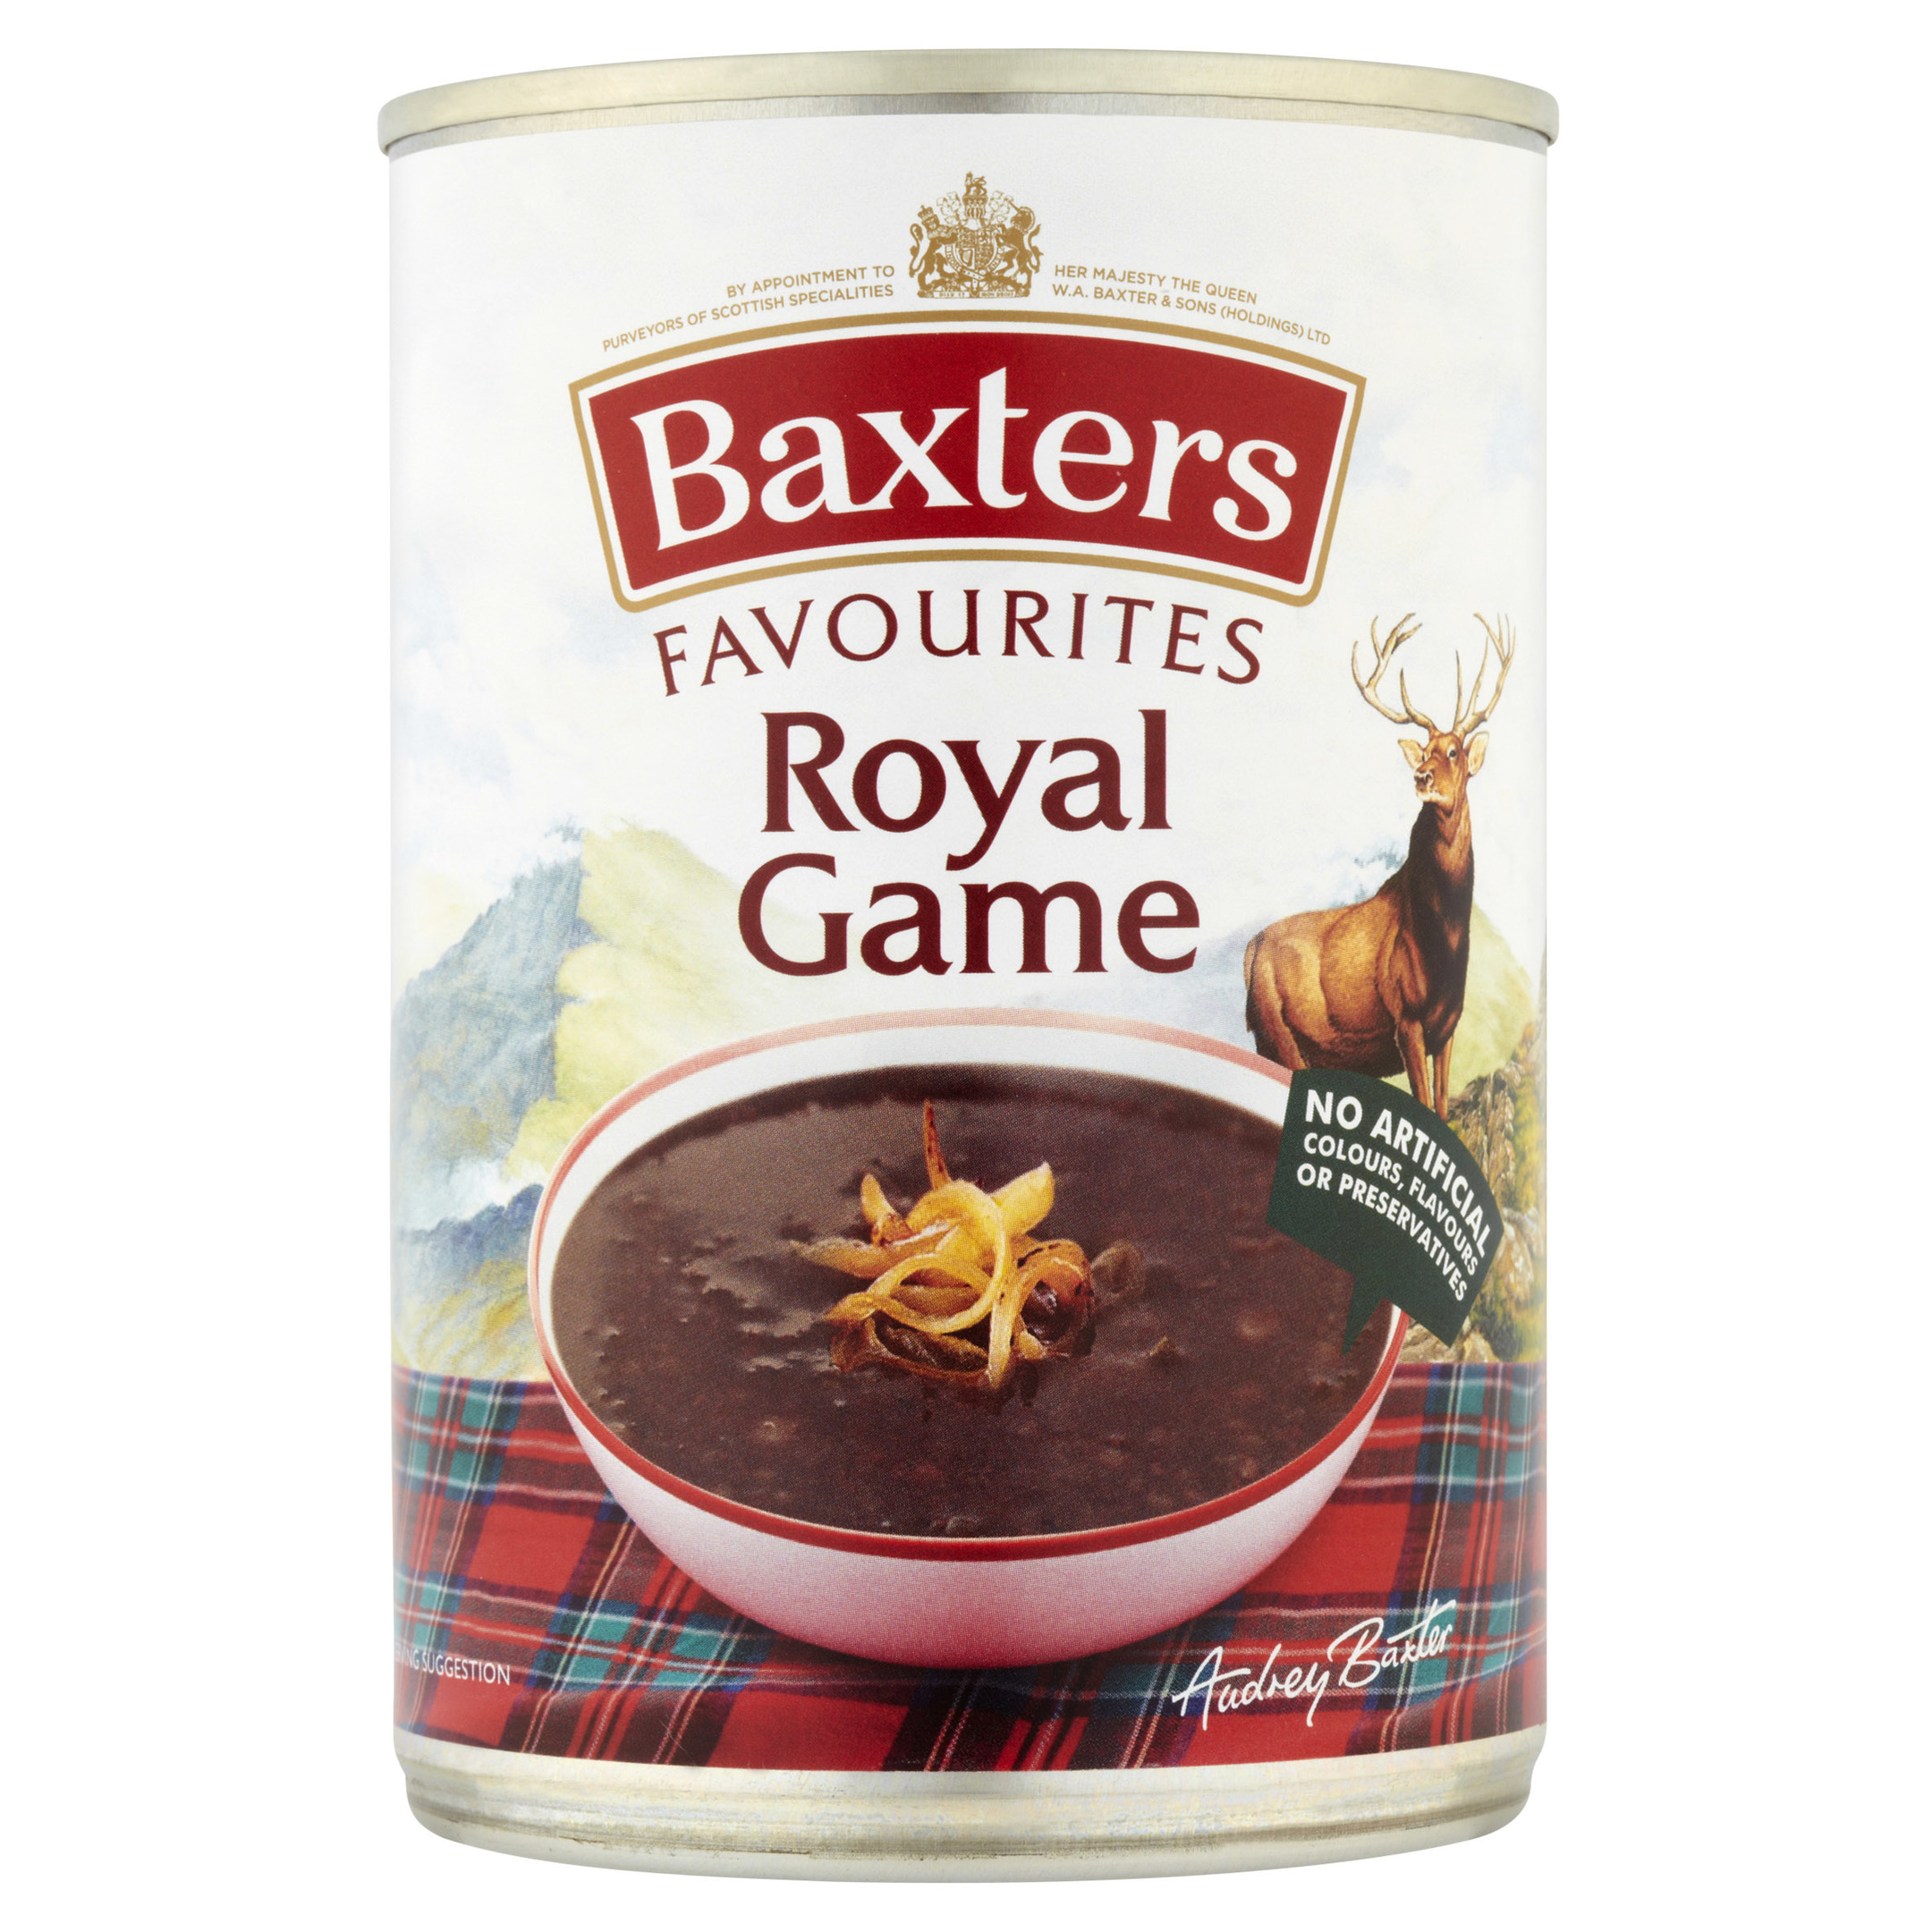 Baxter's Favourites Royal Game Soup